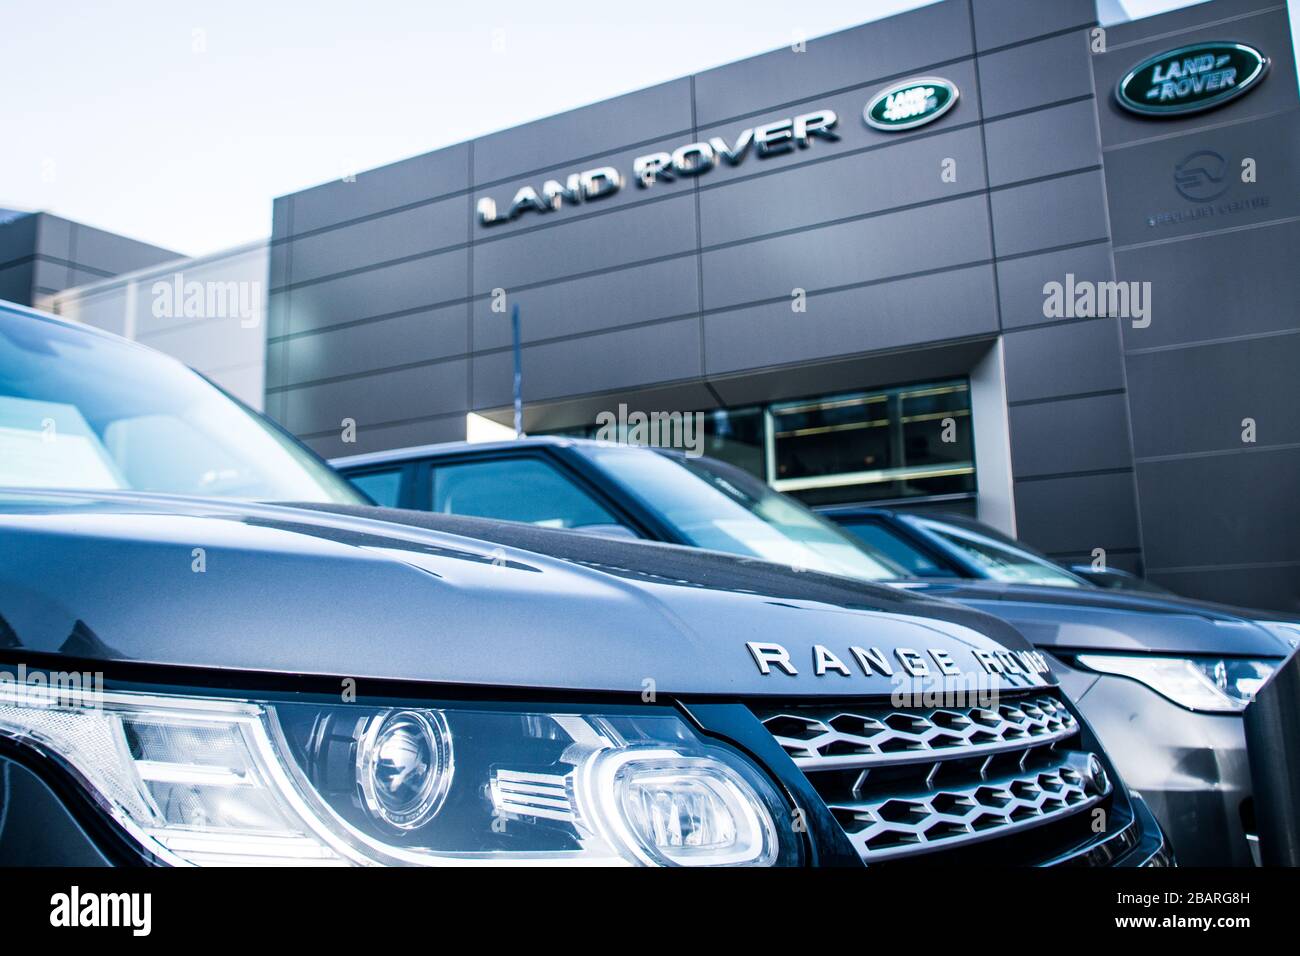 Land Rover car showroom- a British multinational automotive company. Stock Photo